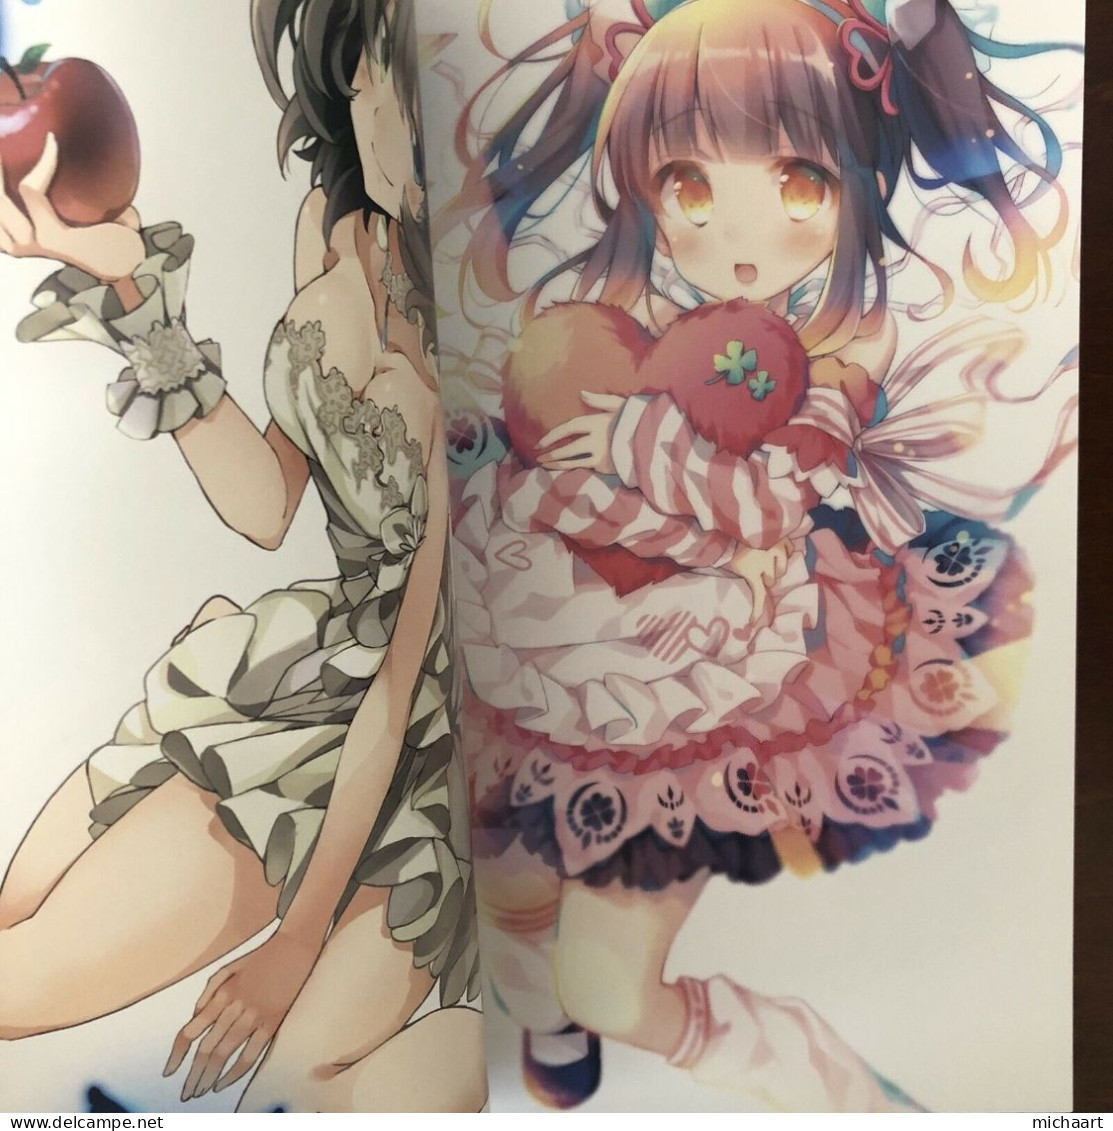 Doujinshi Cinderella Decoration Mika Pikazo Art Book Illustration Manga 03009 - Fumetti & Mangas (altri Lingue)